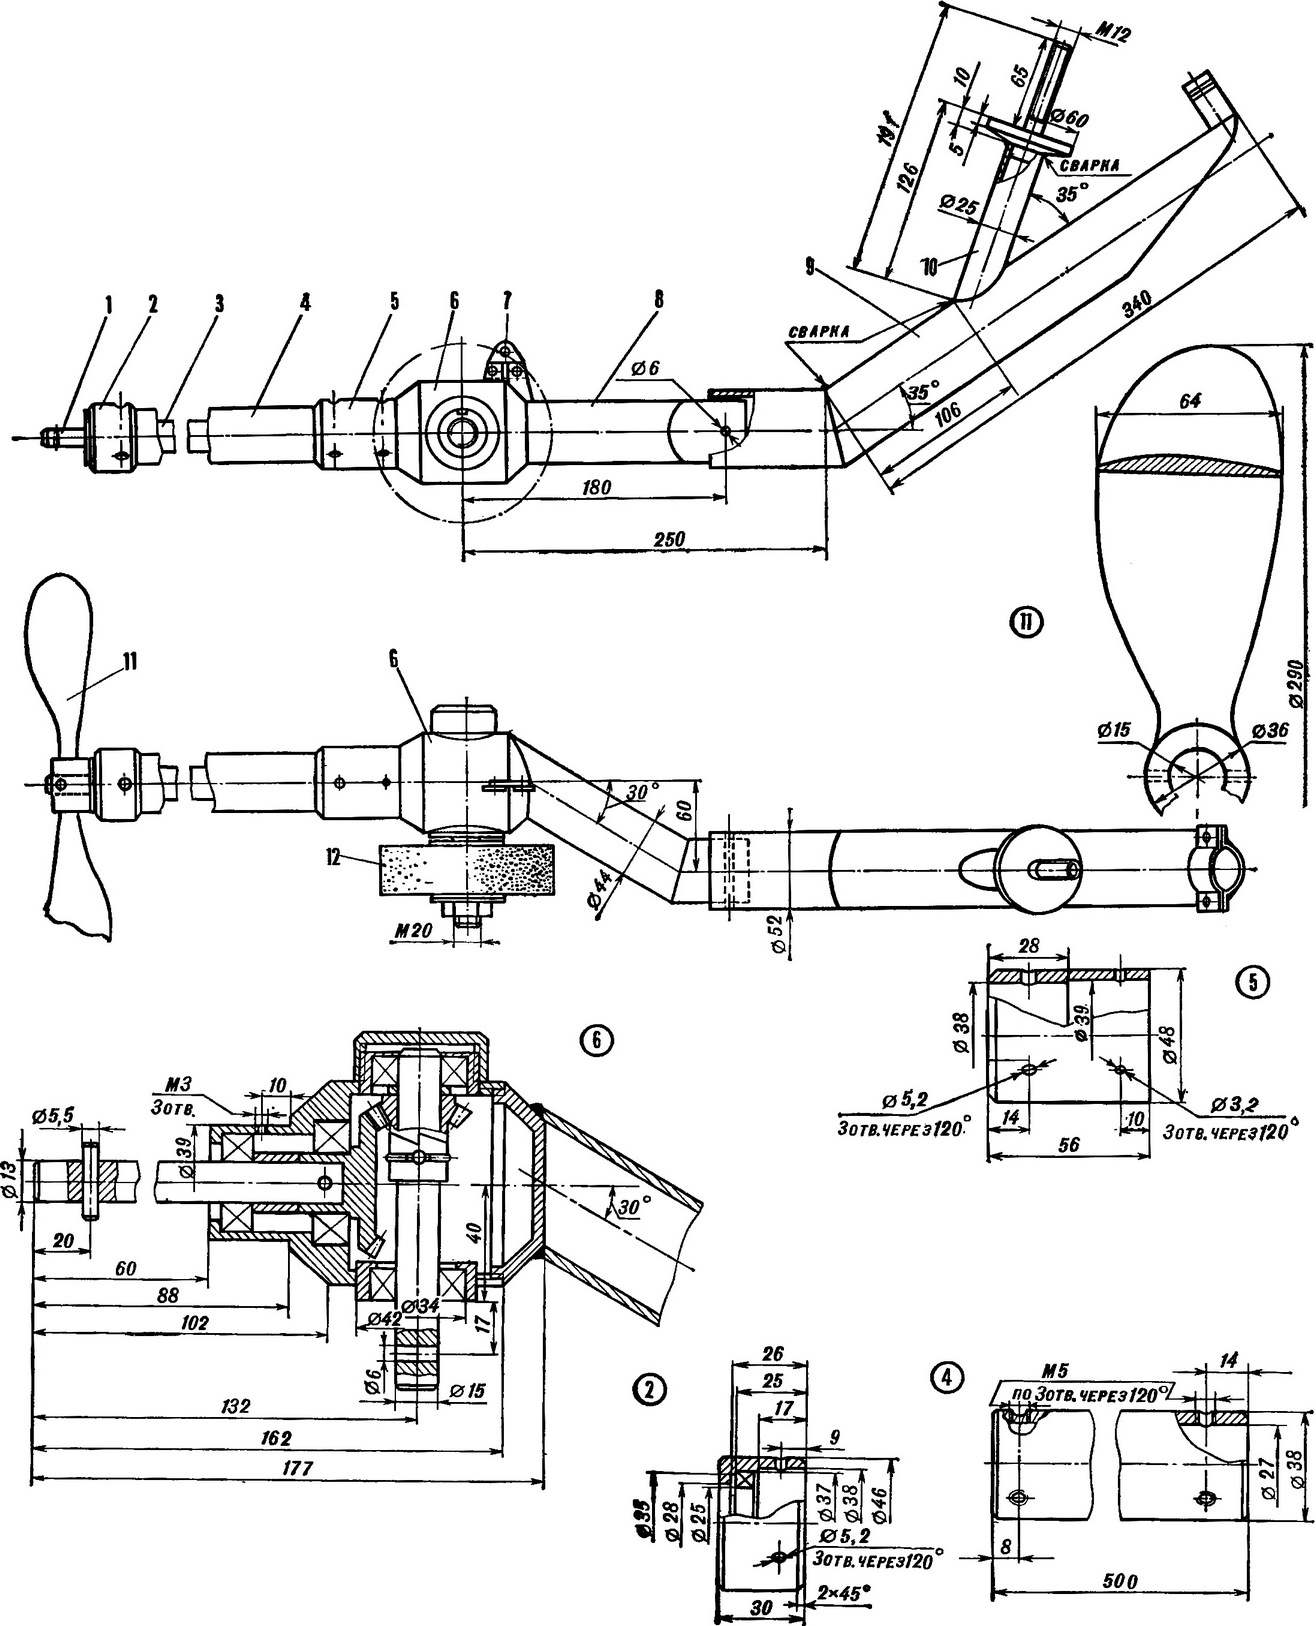 Fig. 4. Actuator design for the screw